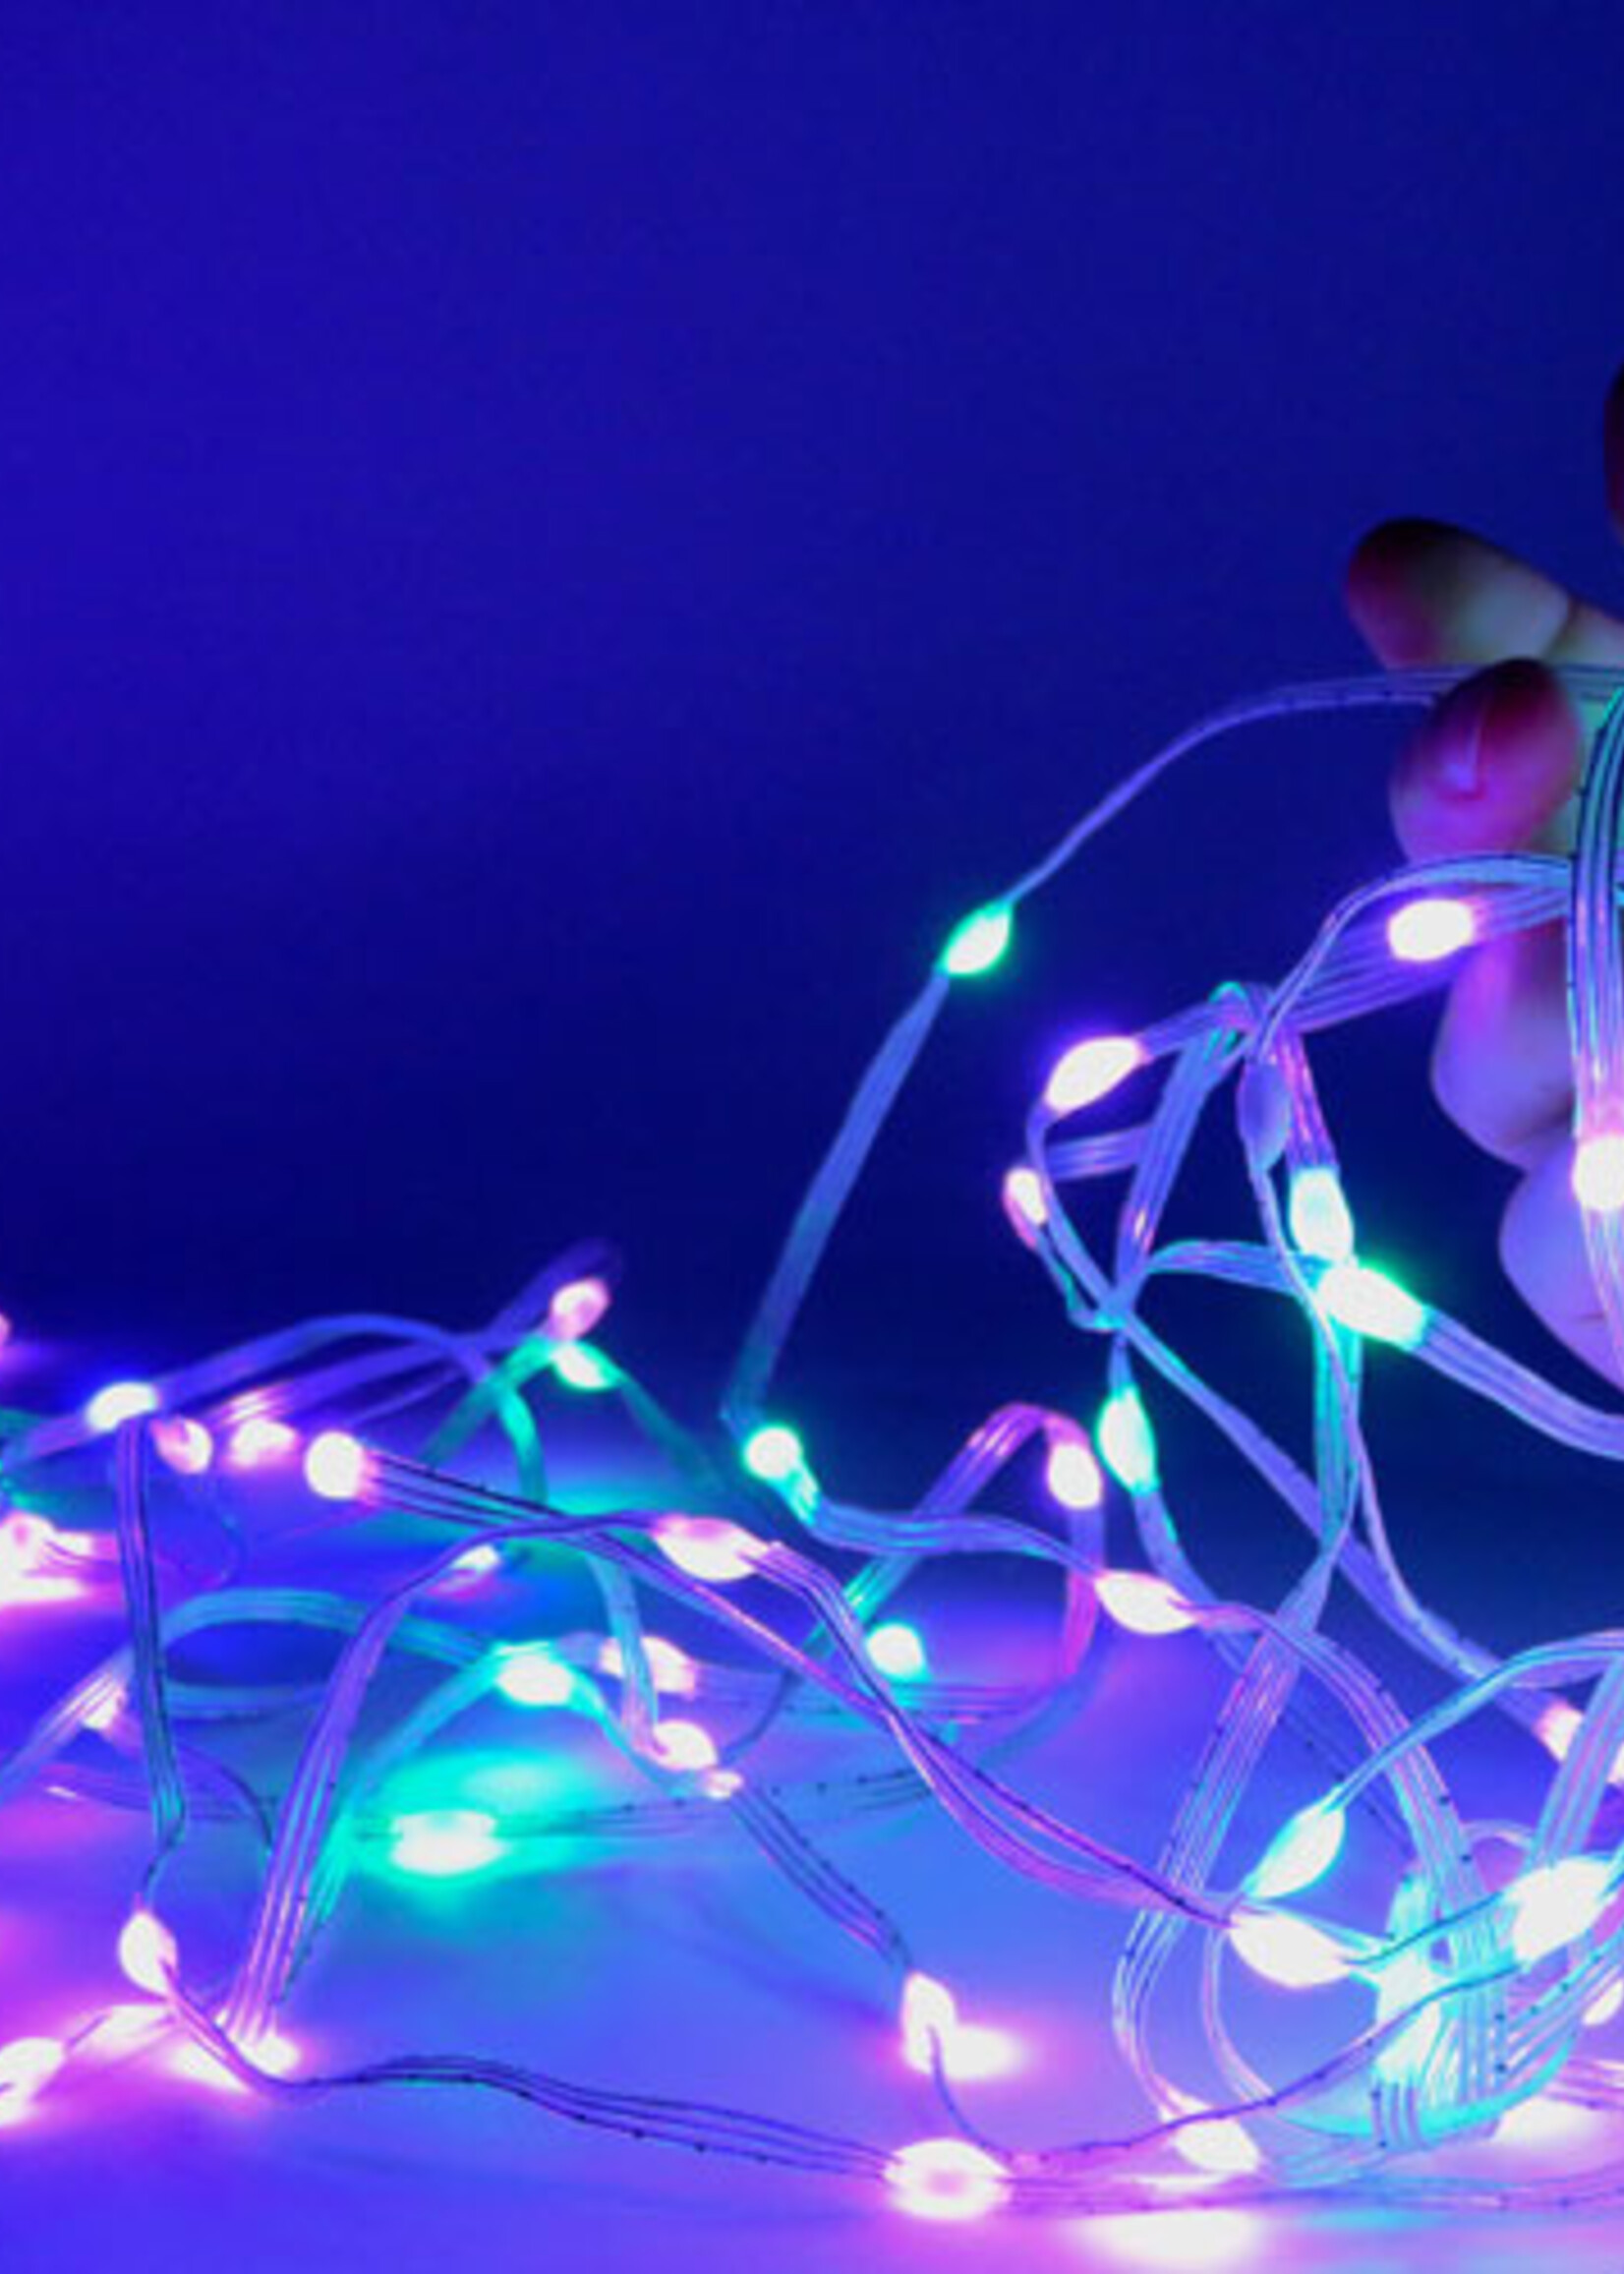 SOLISTECH Smart LED light string RGB 10 meters App control